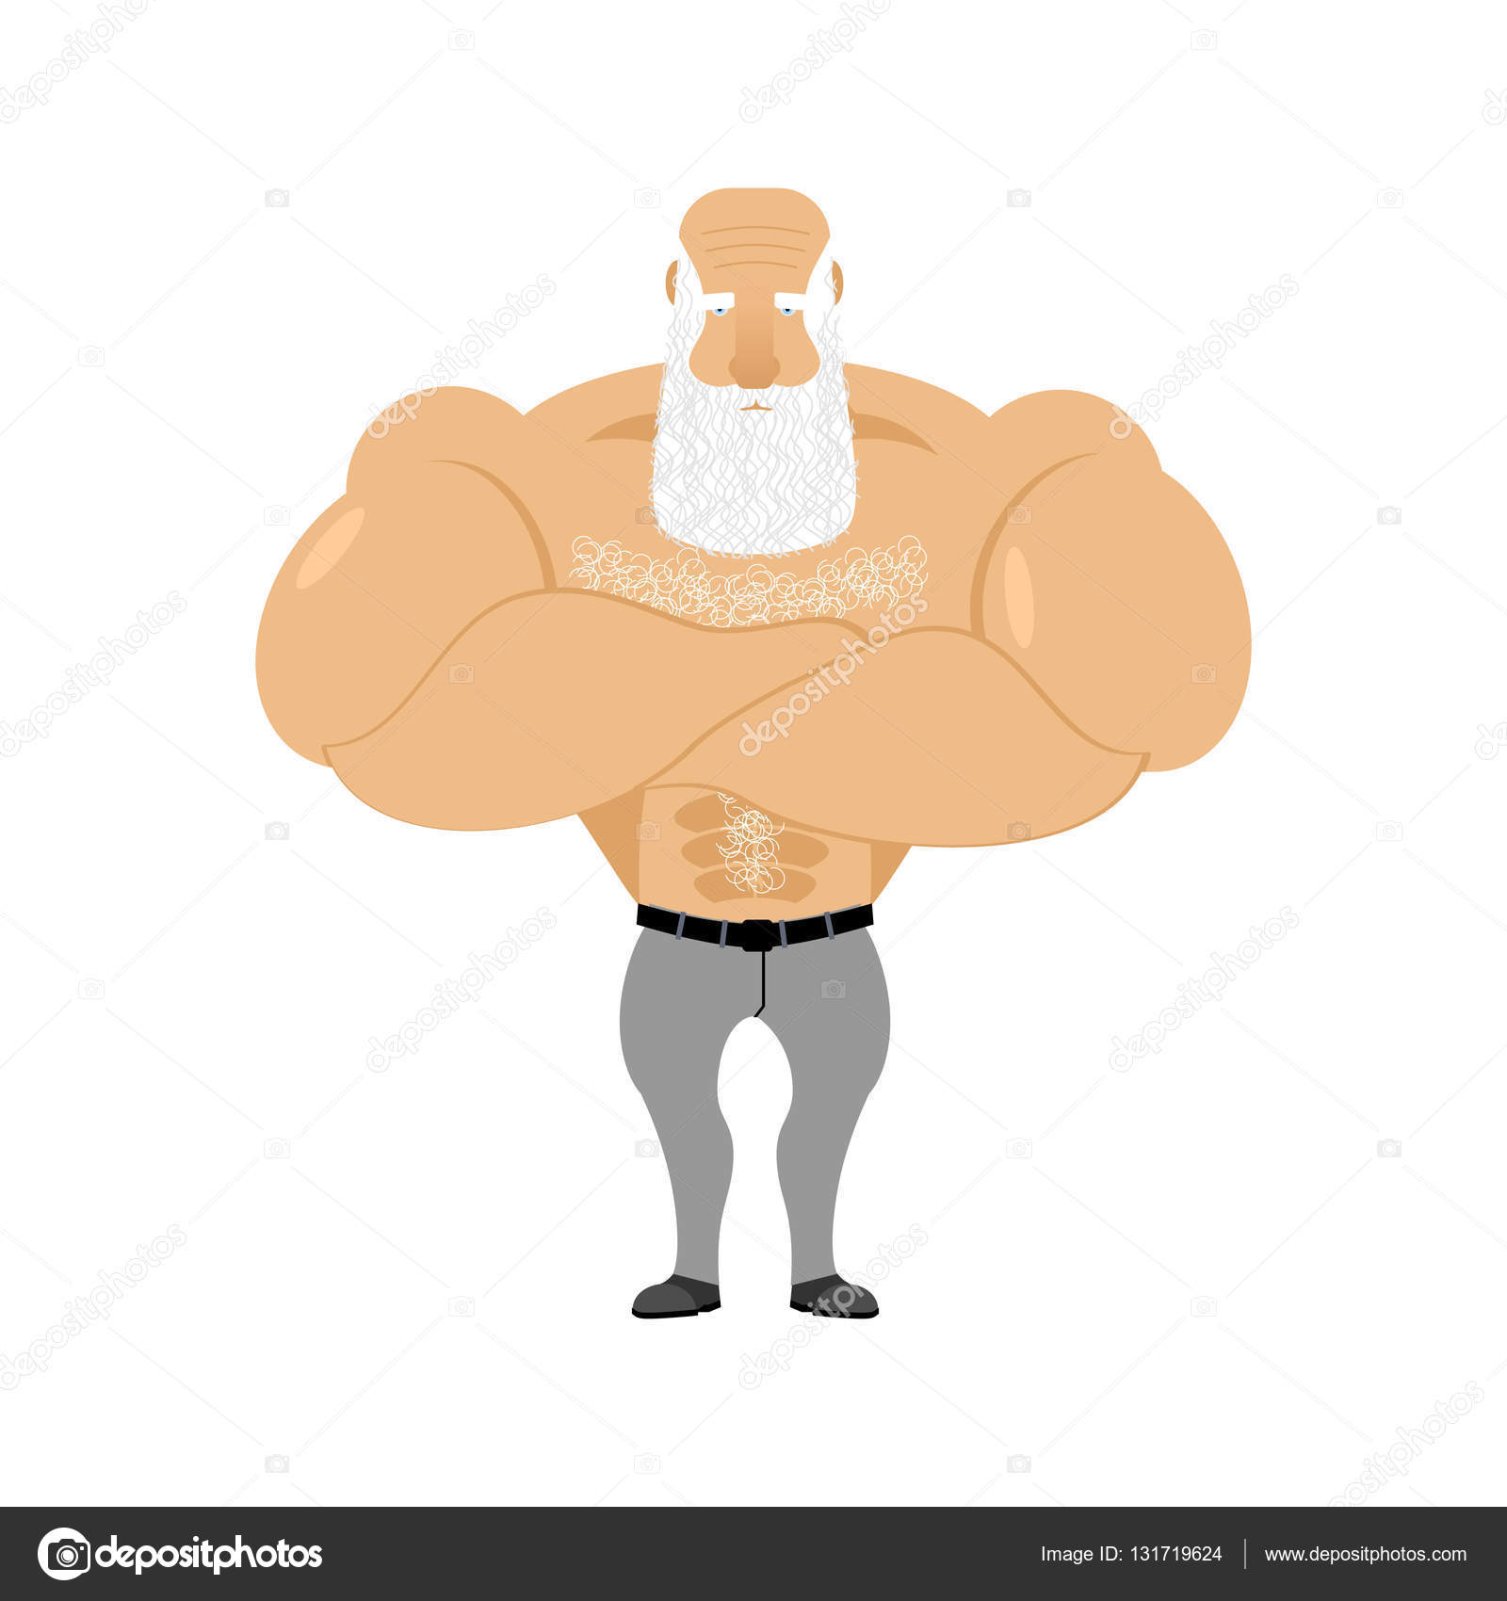 depositphotos_131719624-stock-illustration-strong-grandfather-fitness-retired-athlete.jpg